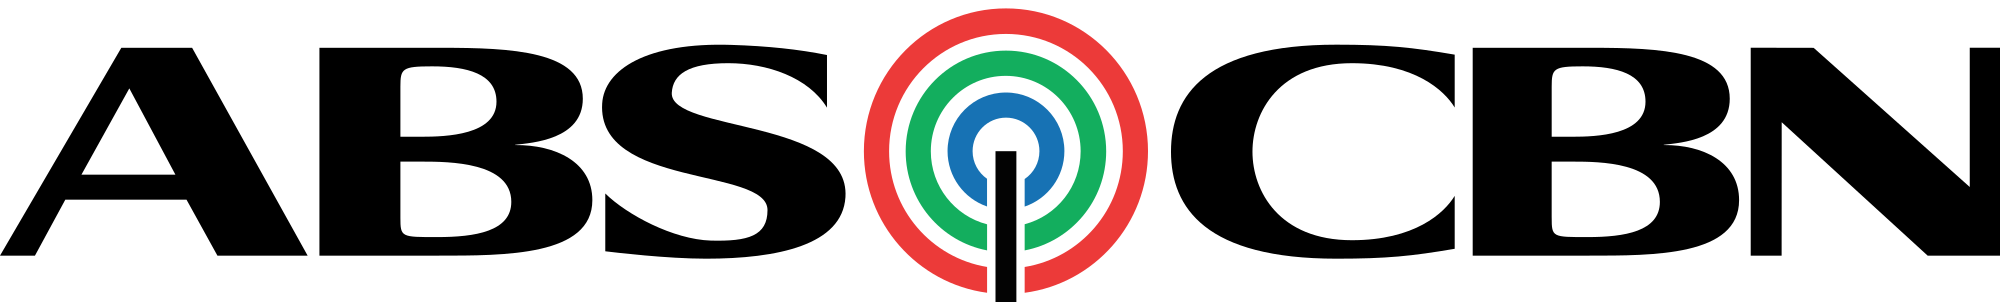 ABS-CBN - network